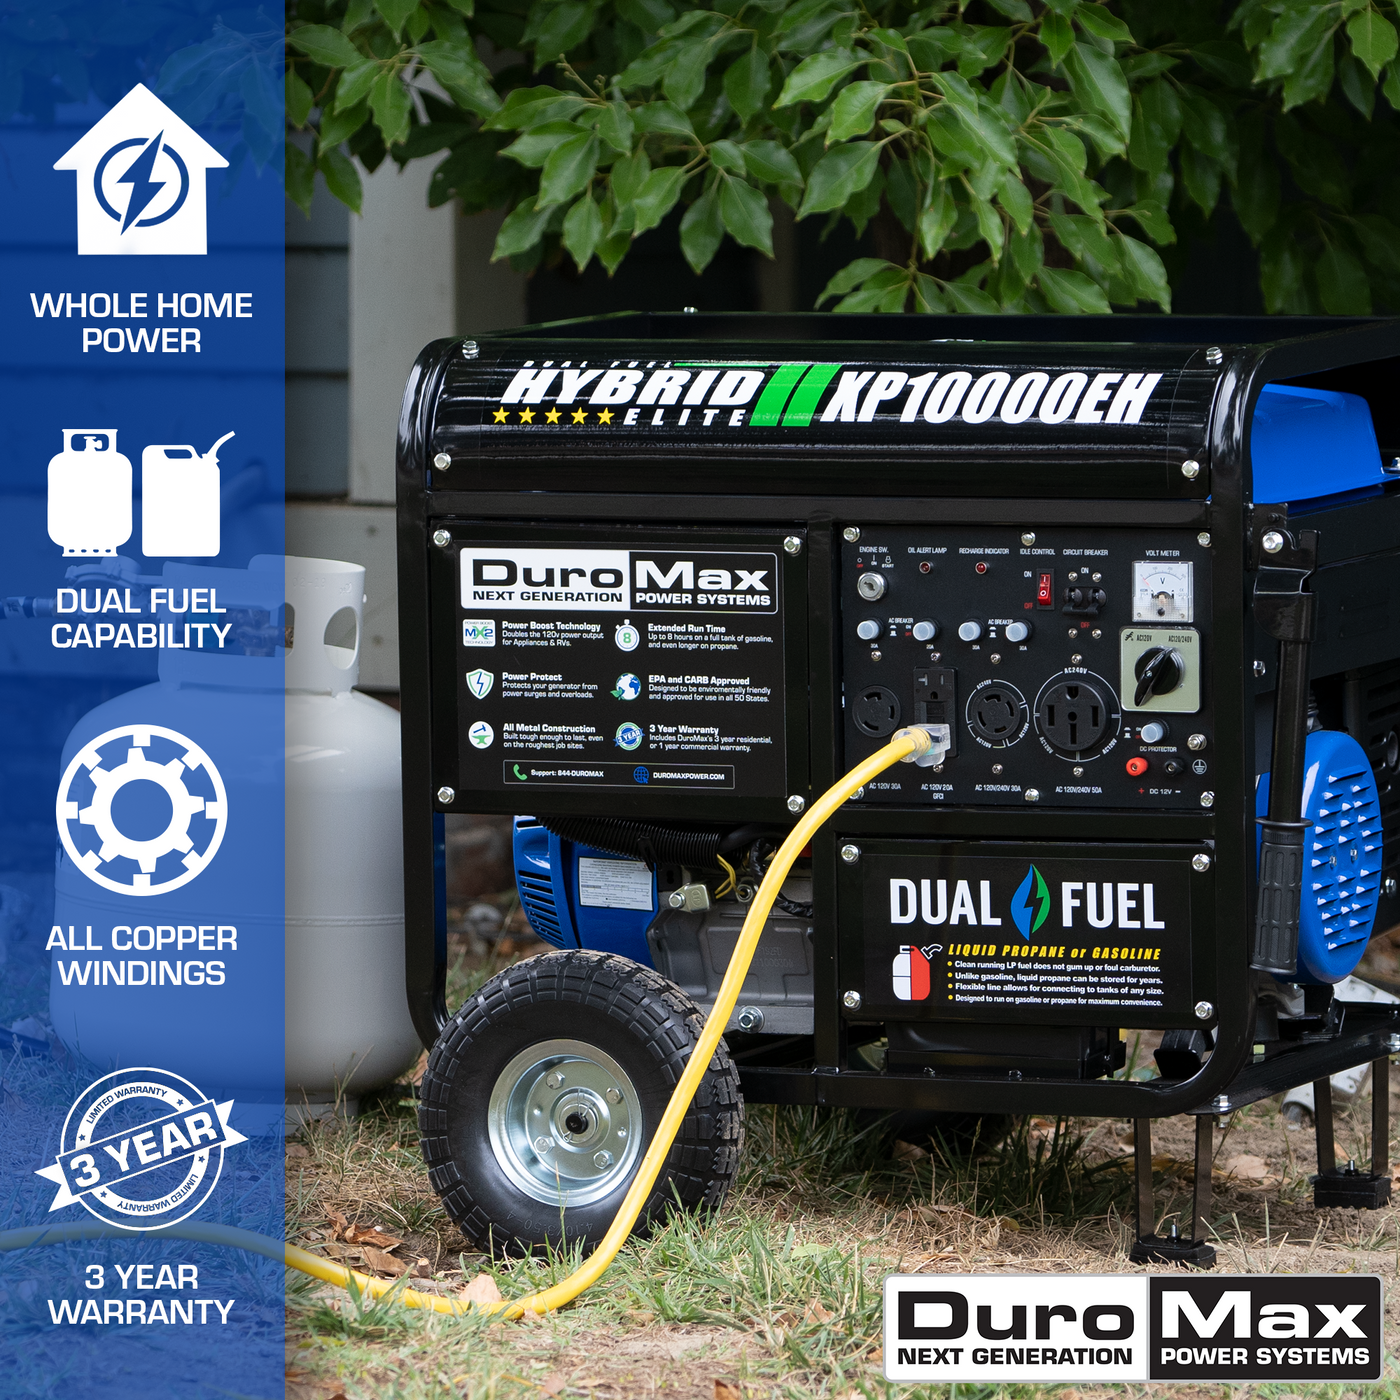 10,000 Watt Dual Fuel Portable Generator – XP10000EH – DuroMax